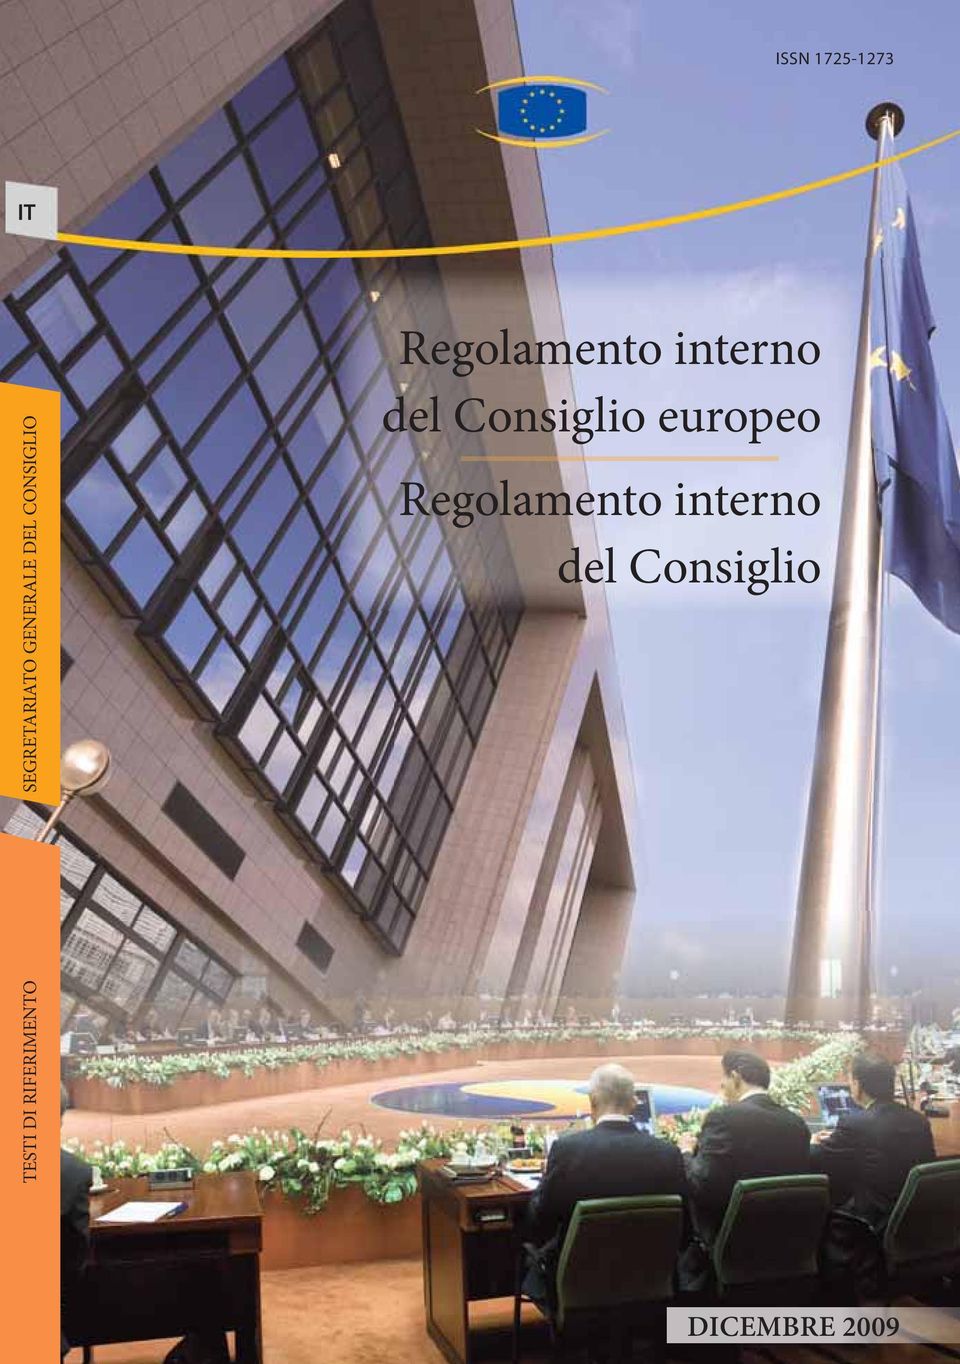 Consiglio europeo Regolamento interno